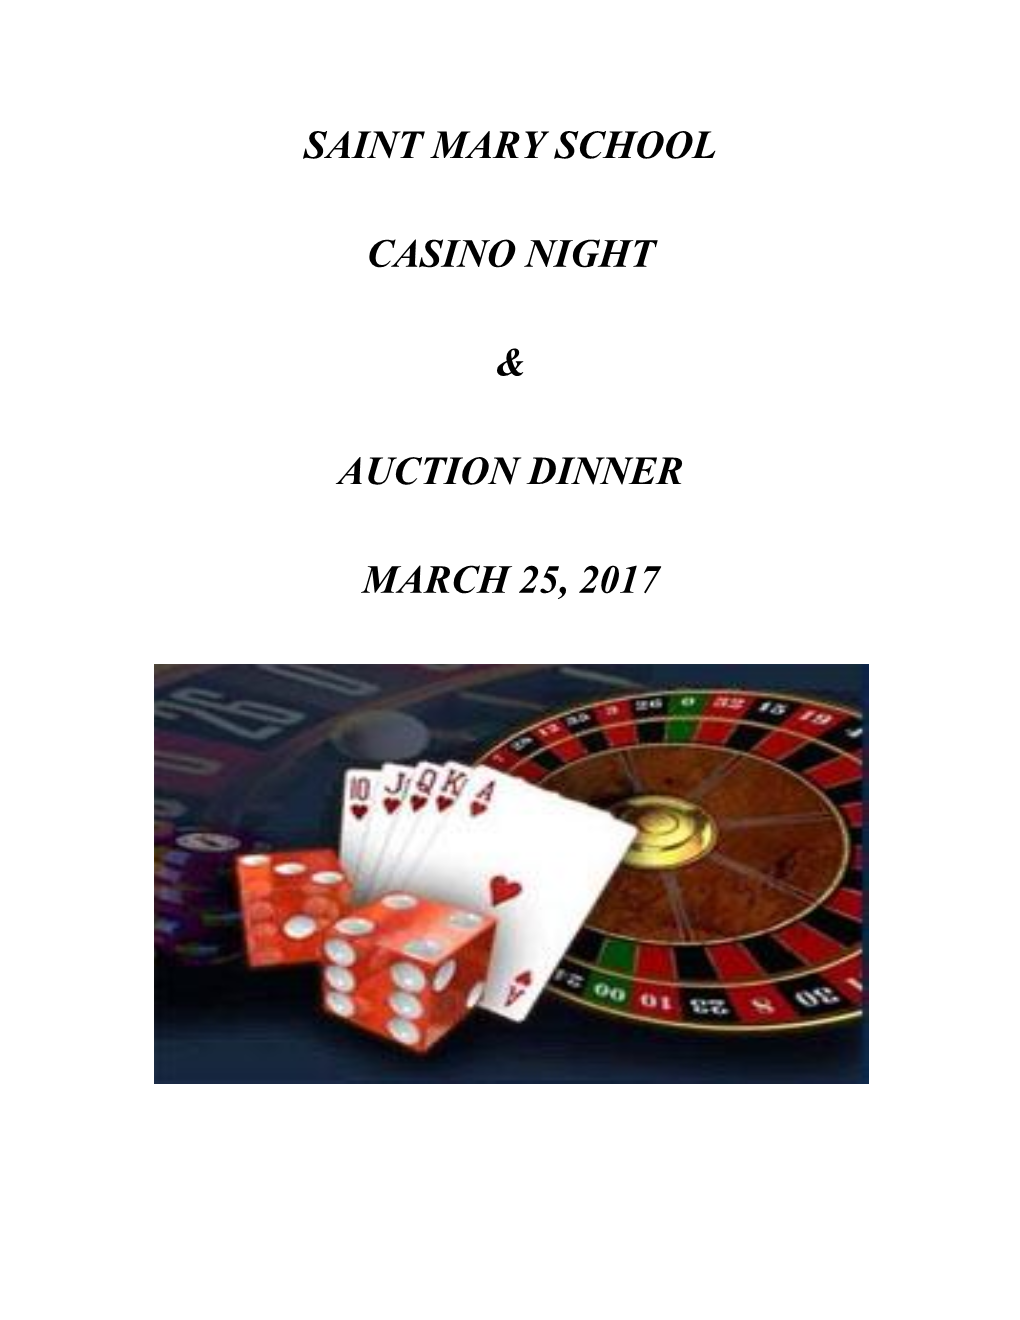 Saint Mary School Casino Night & Auction Dinner